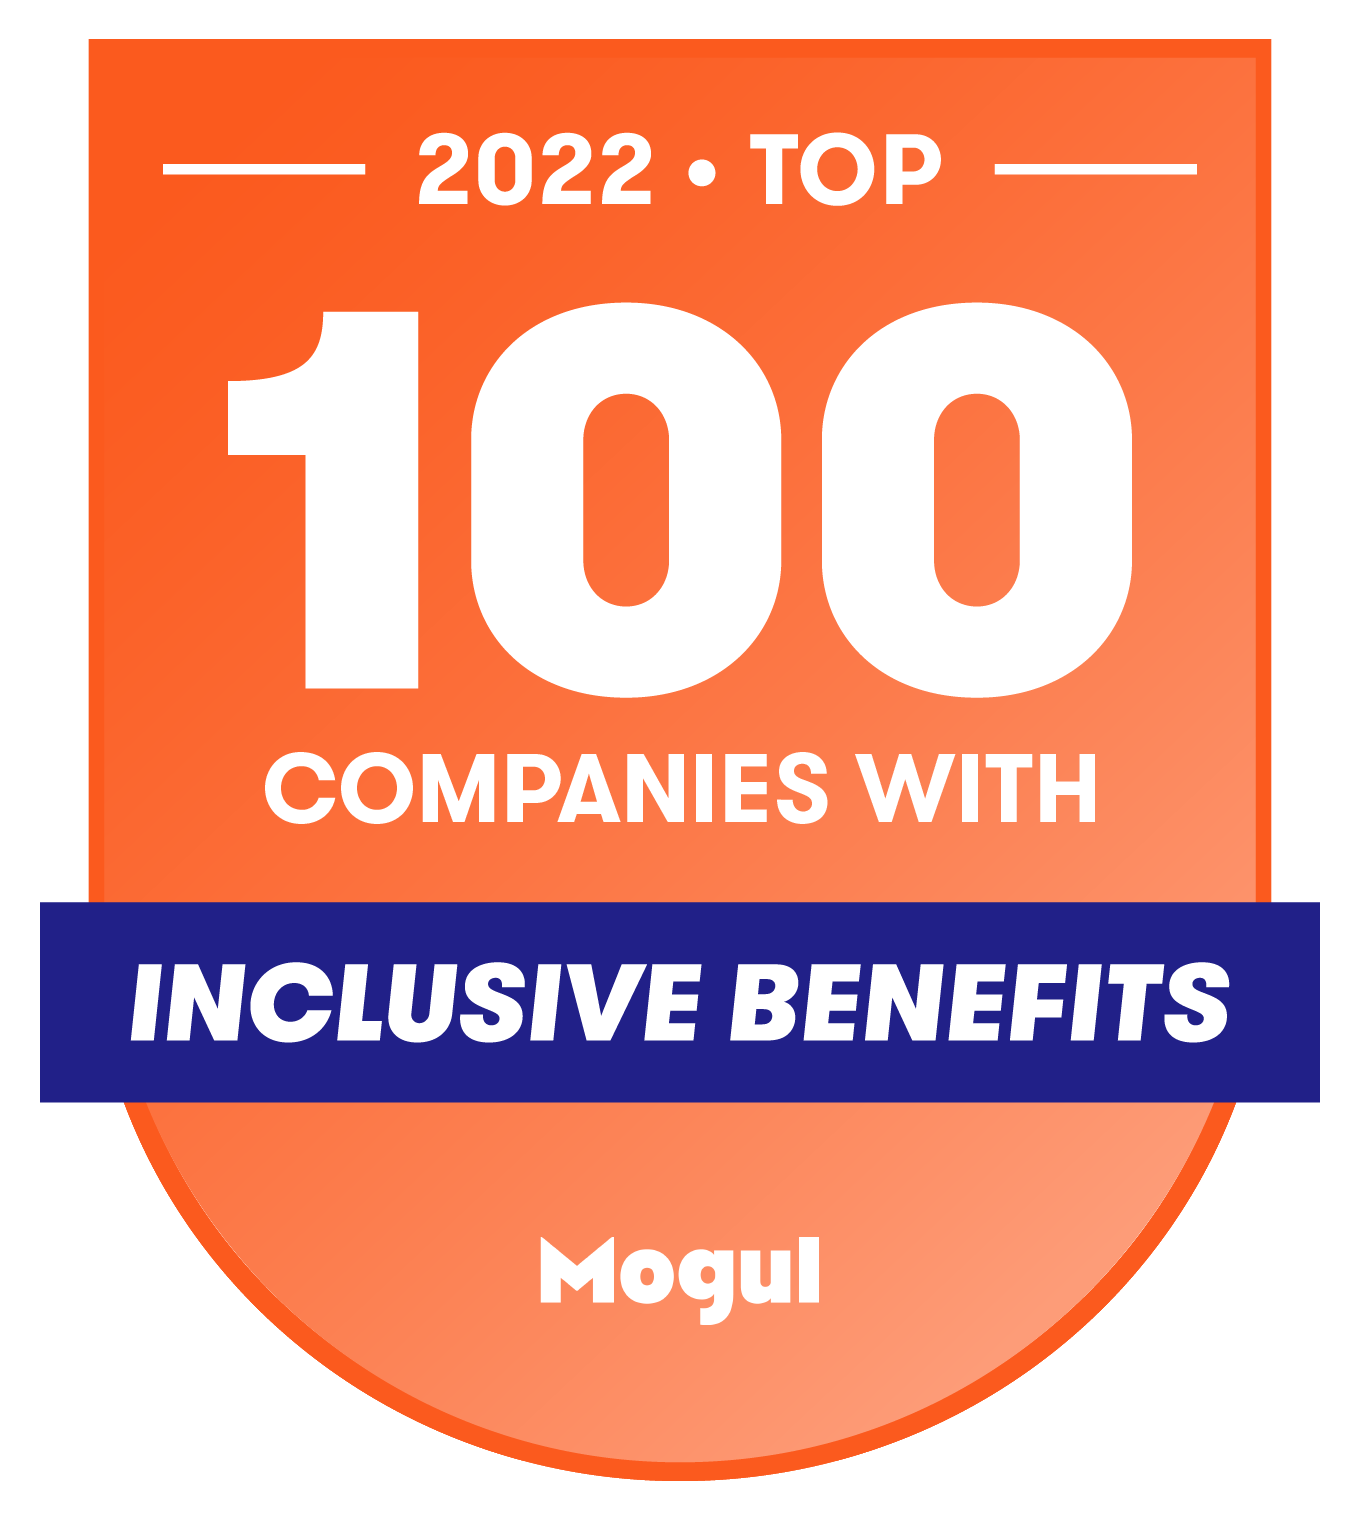 Top 100 Companies with Inclusive Benefits - Mogul Award